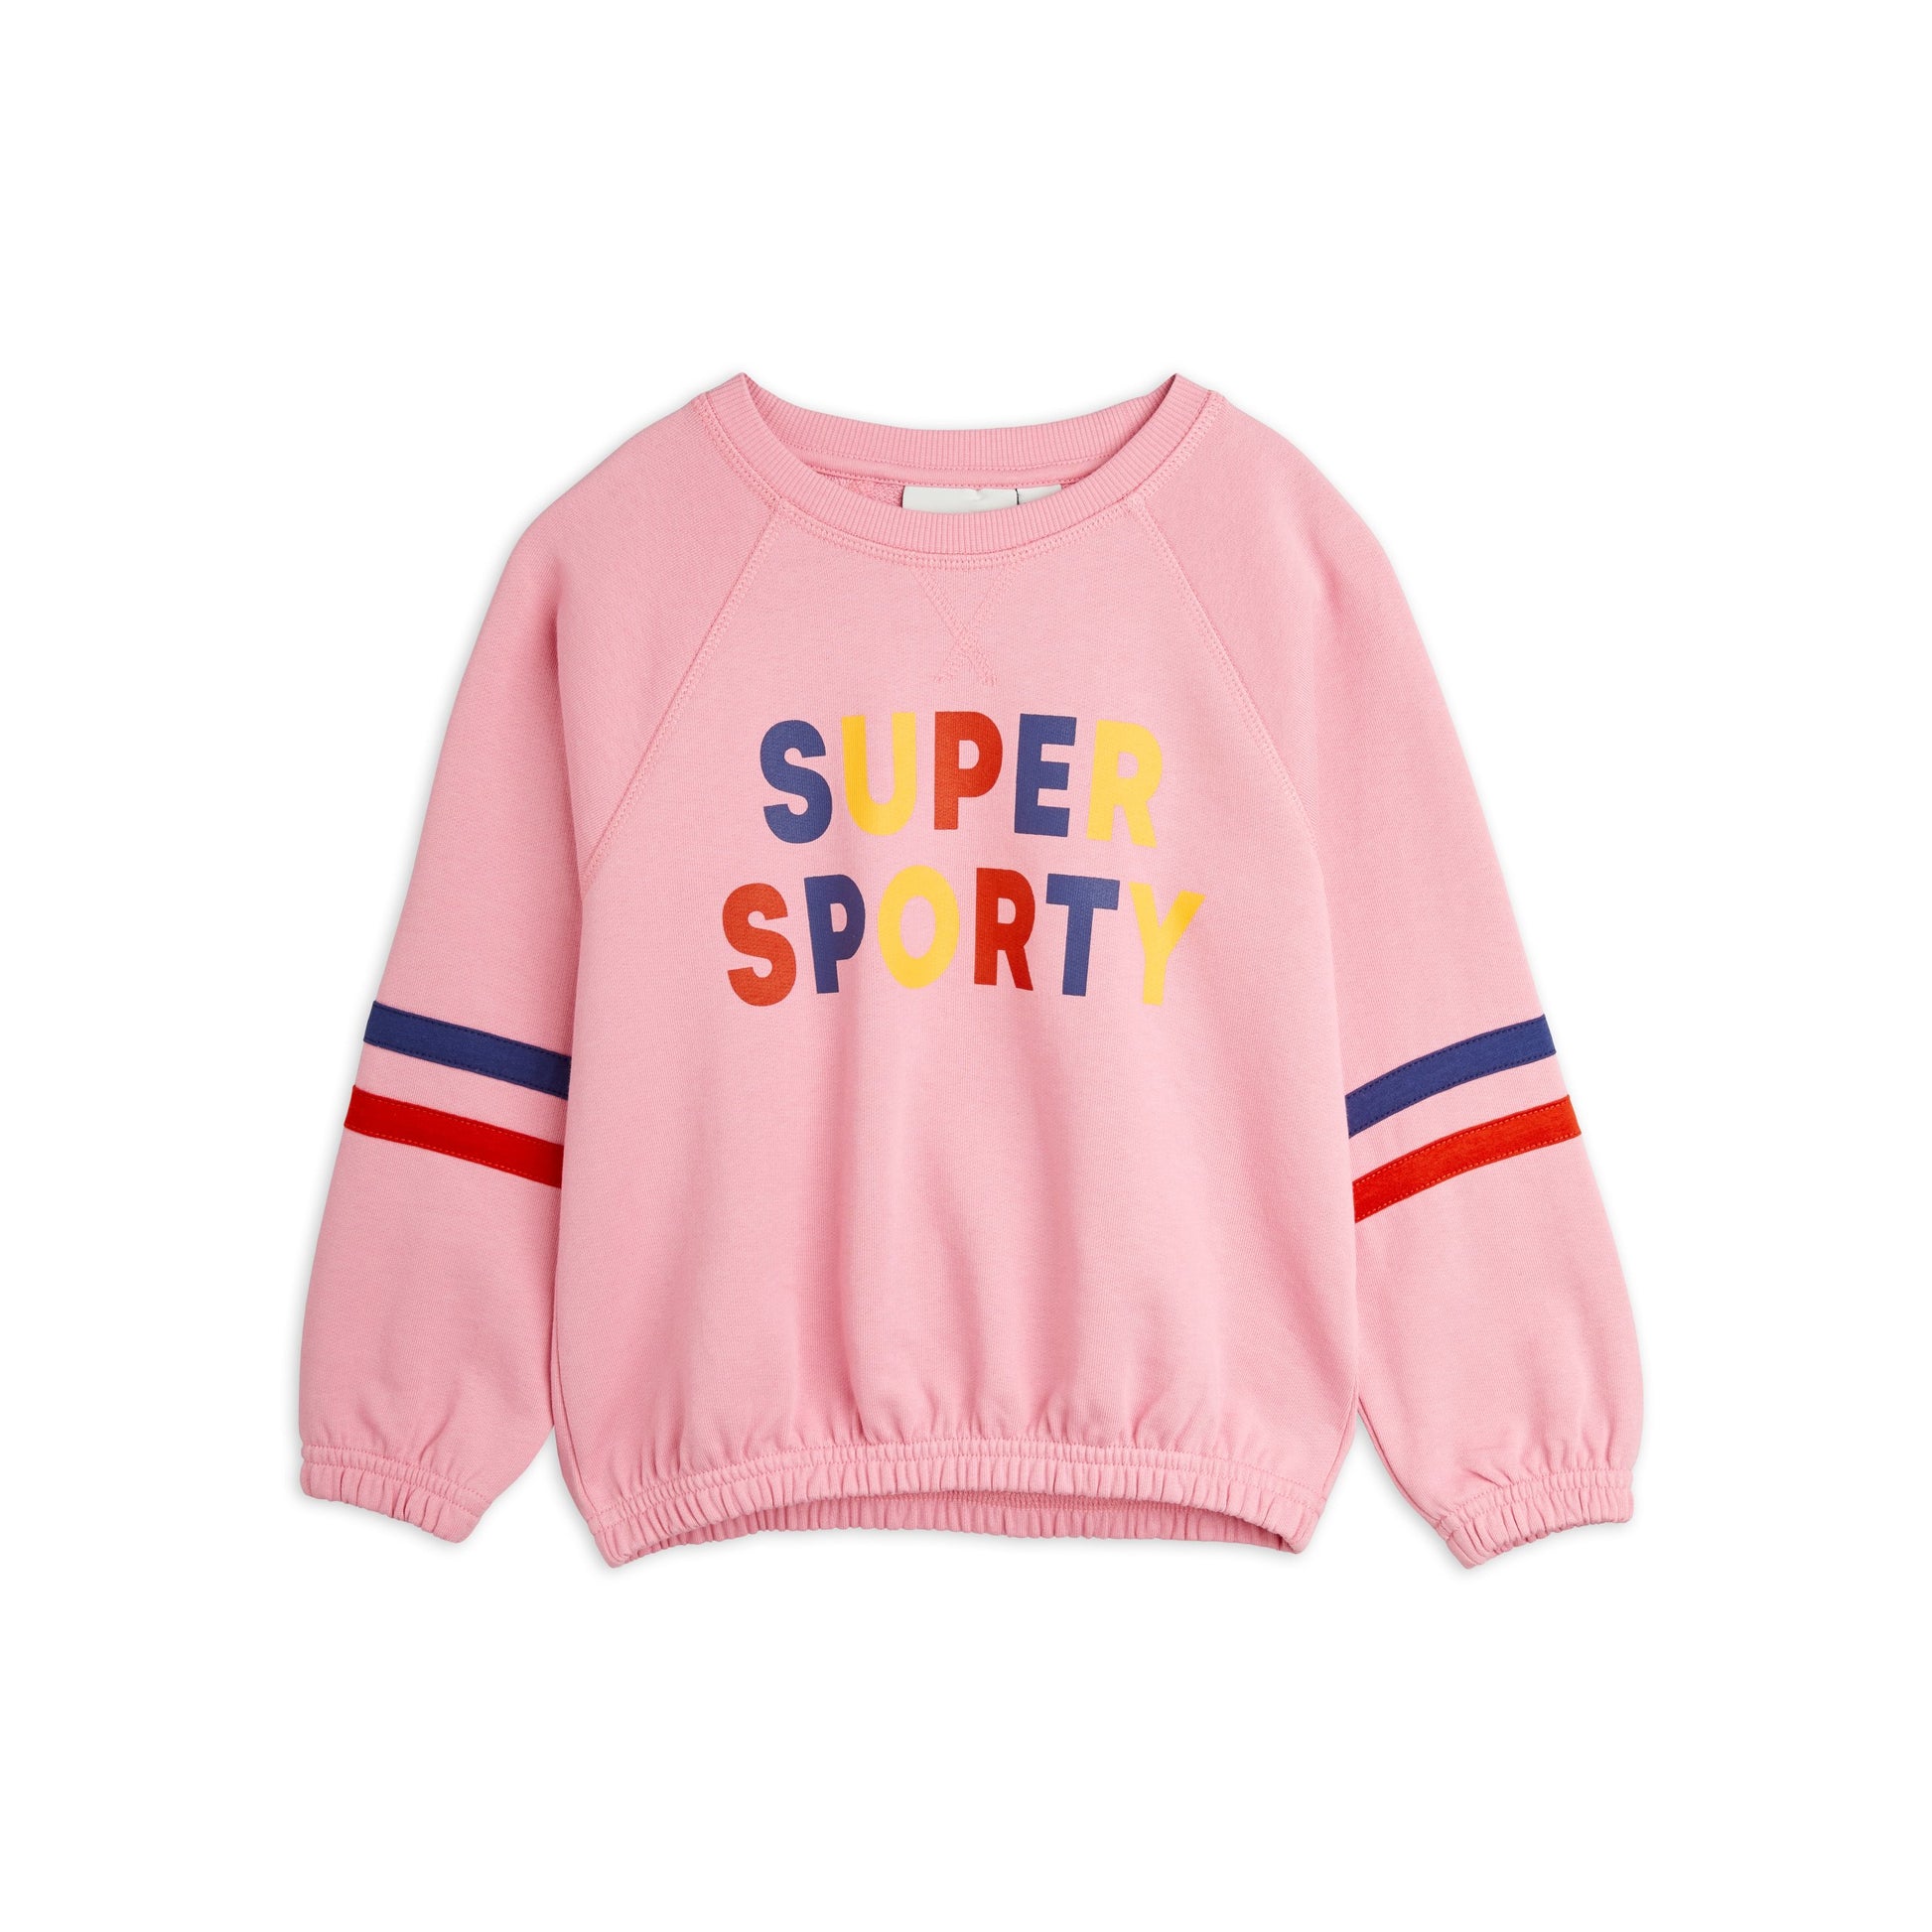 MINI RODINI Super Sporty Sweatshirt ALWAYS SHOW